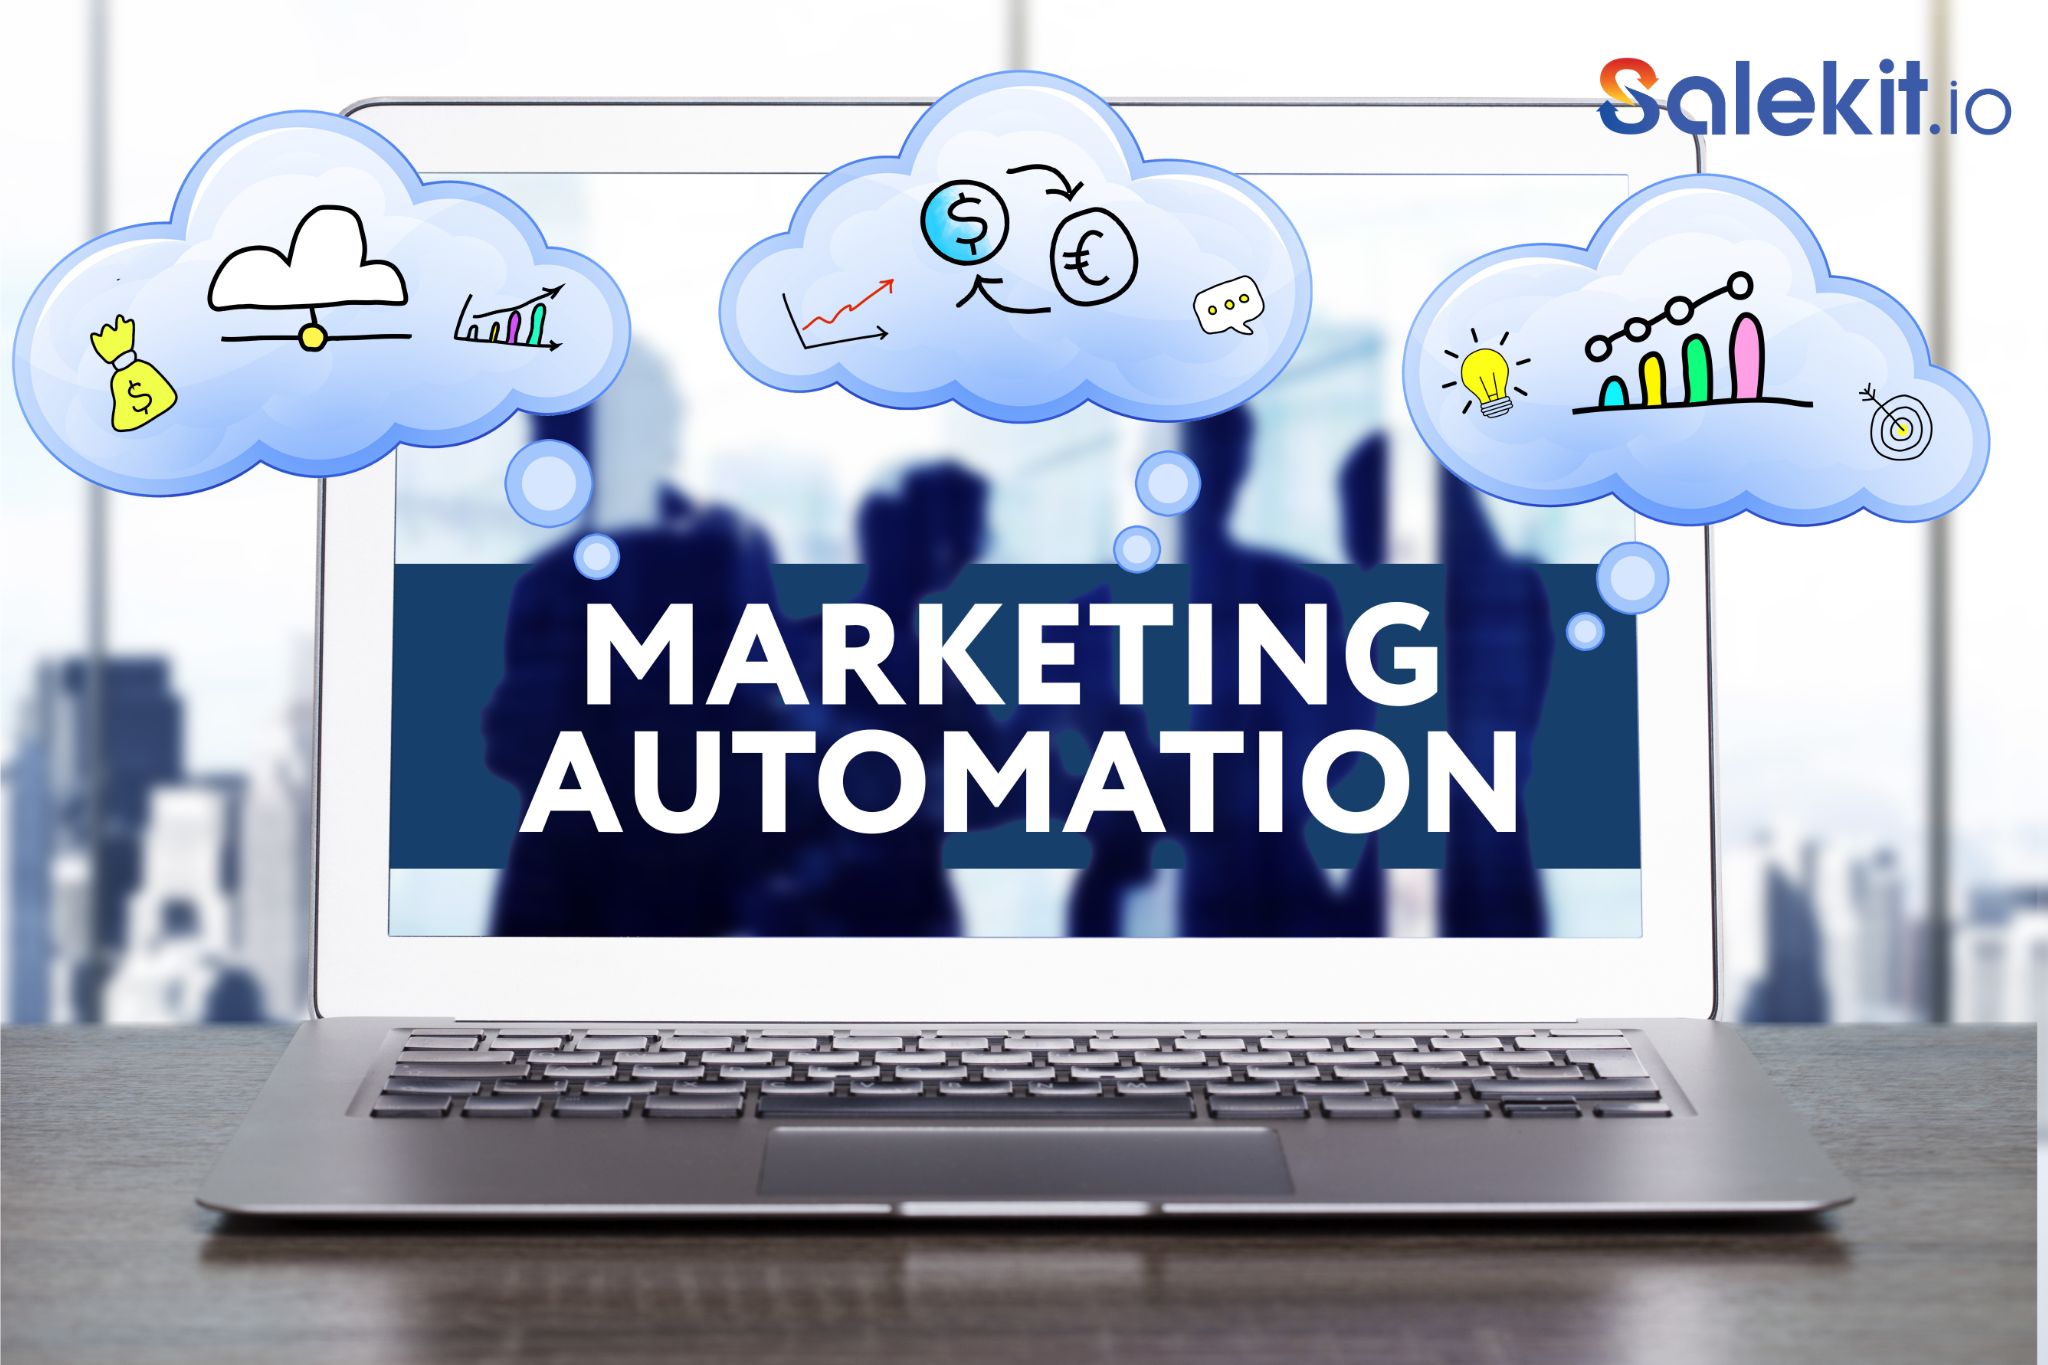 Thời điểm triển khai Marketing Automation phù hợp?